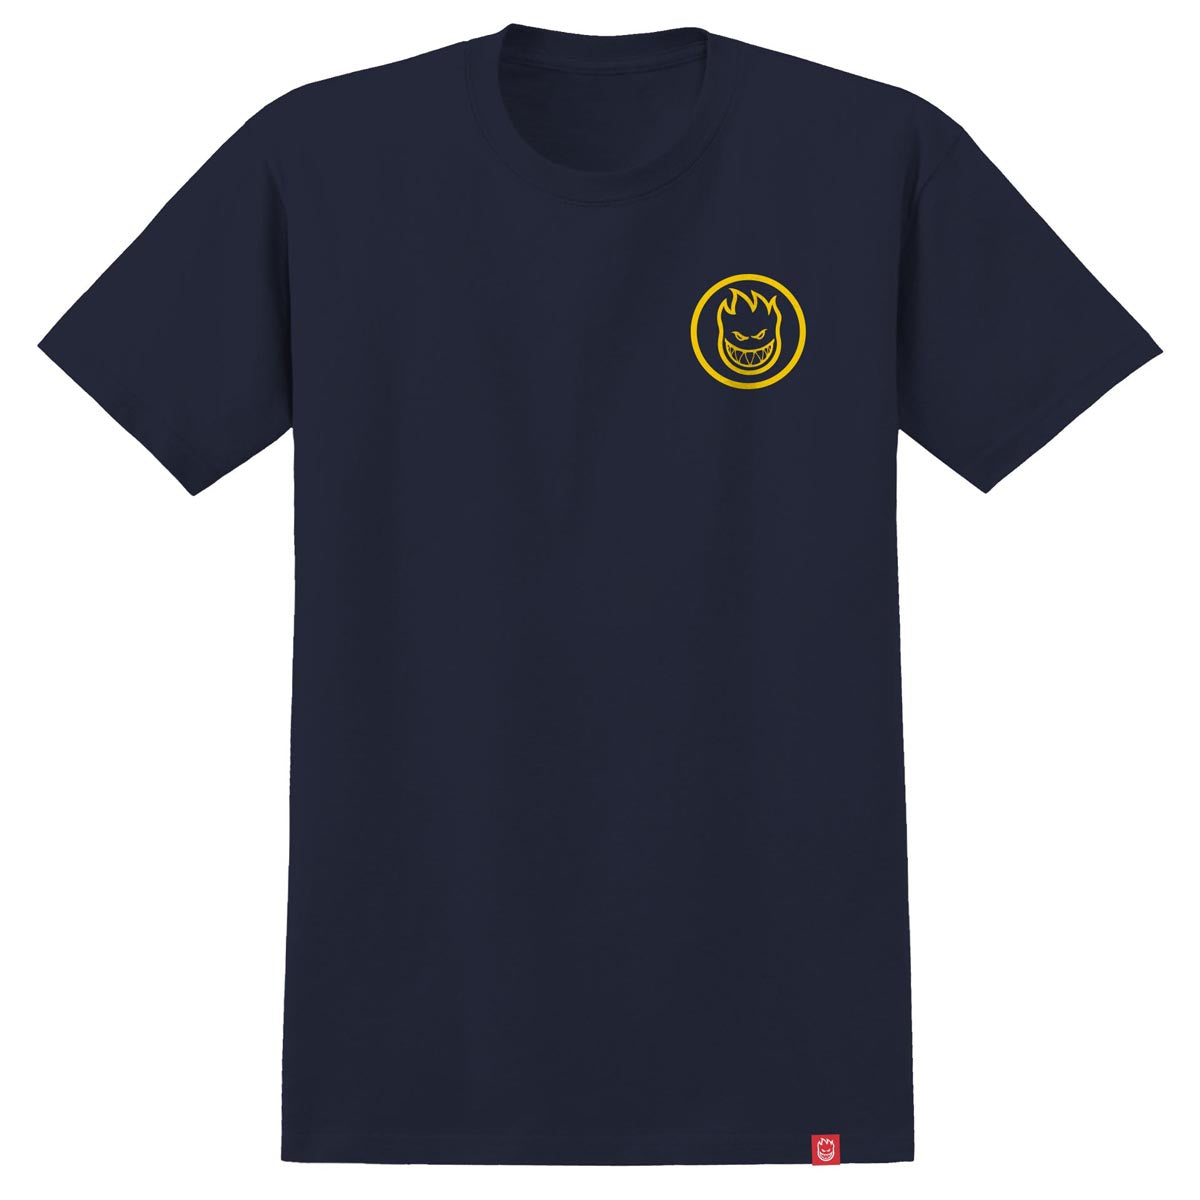 Spitfire Classic Swirl T-Shirt - Navy/Yellow image 2